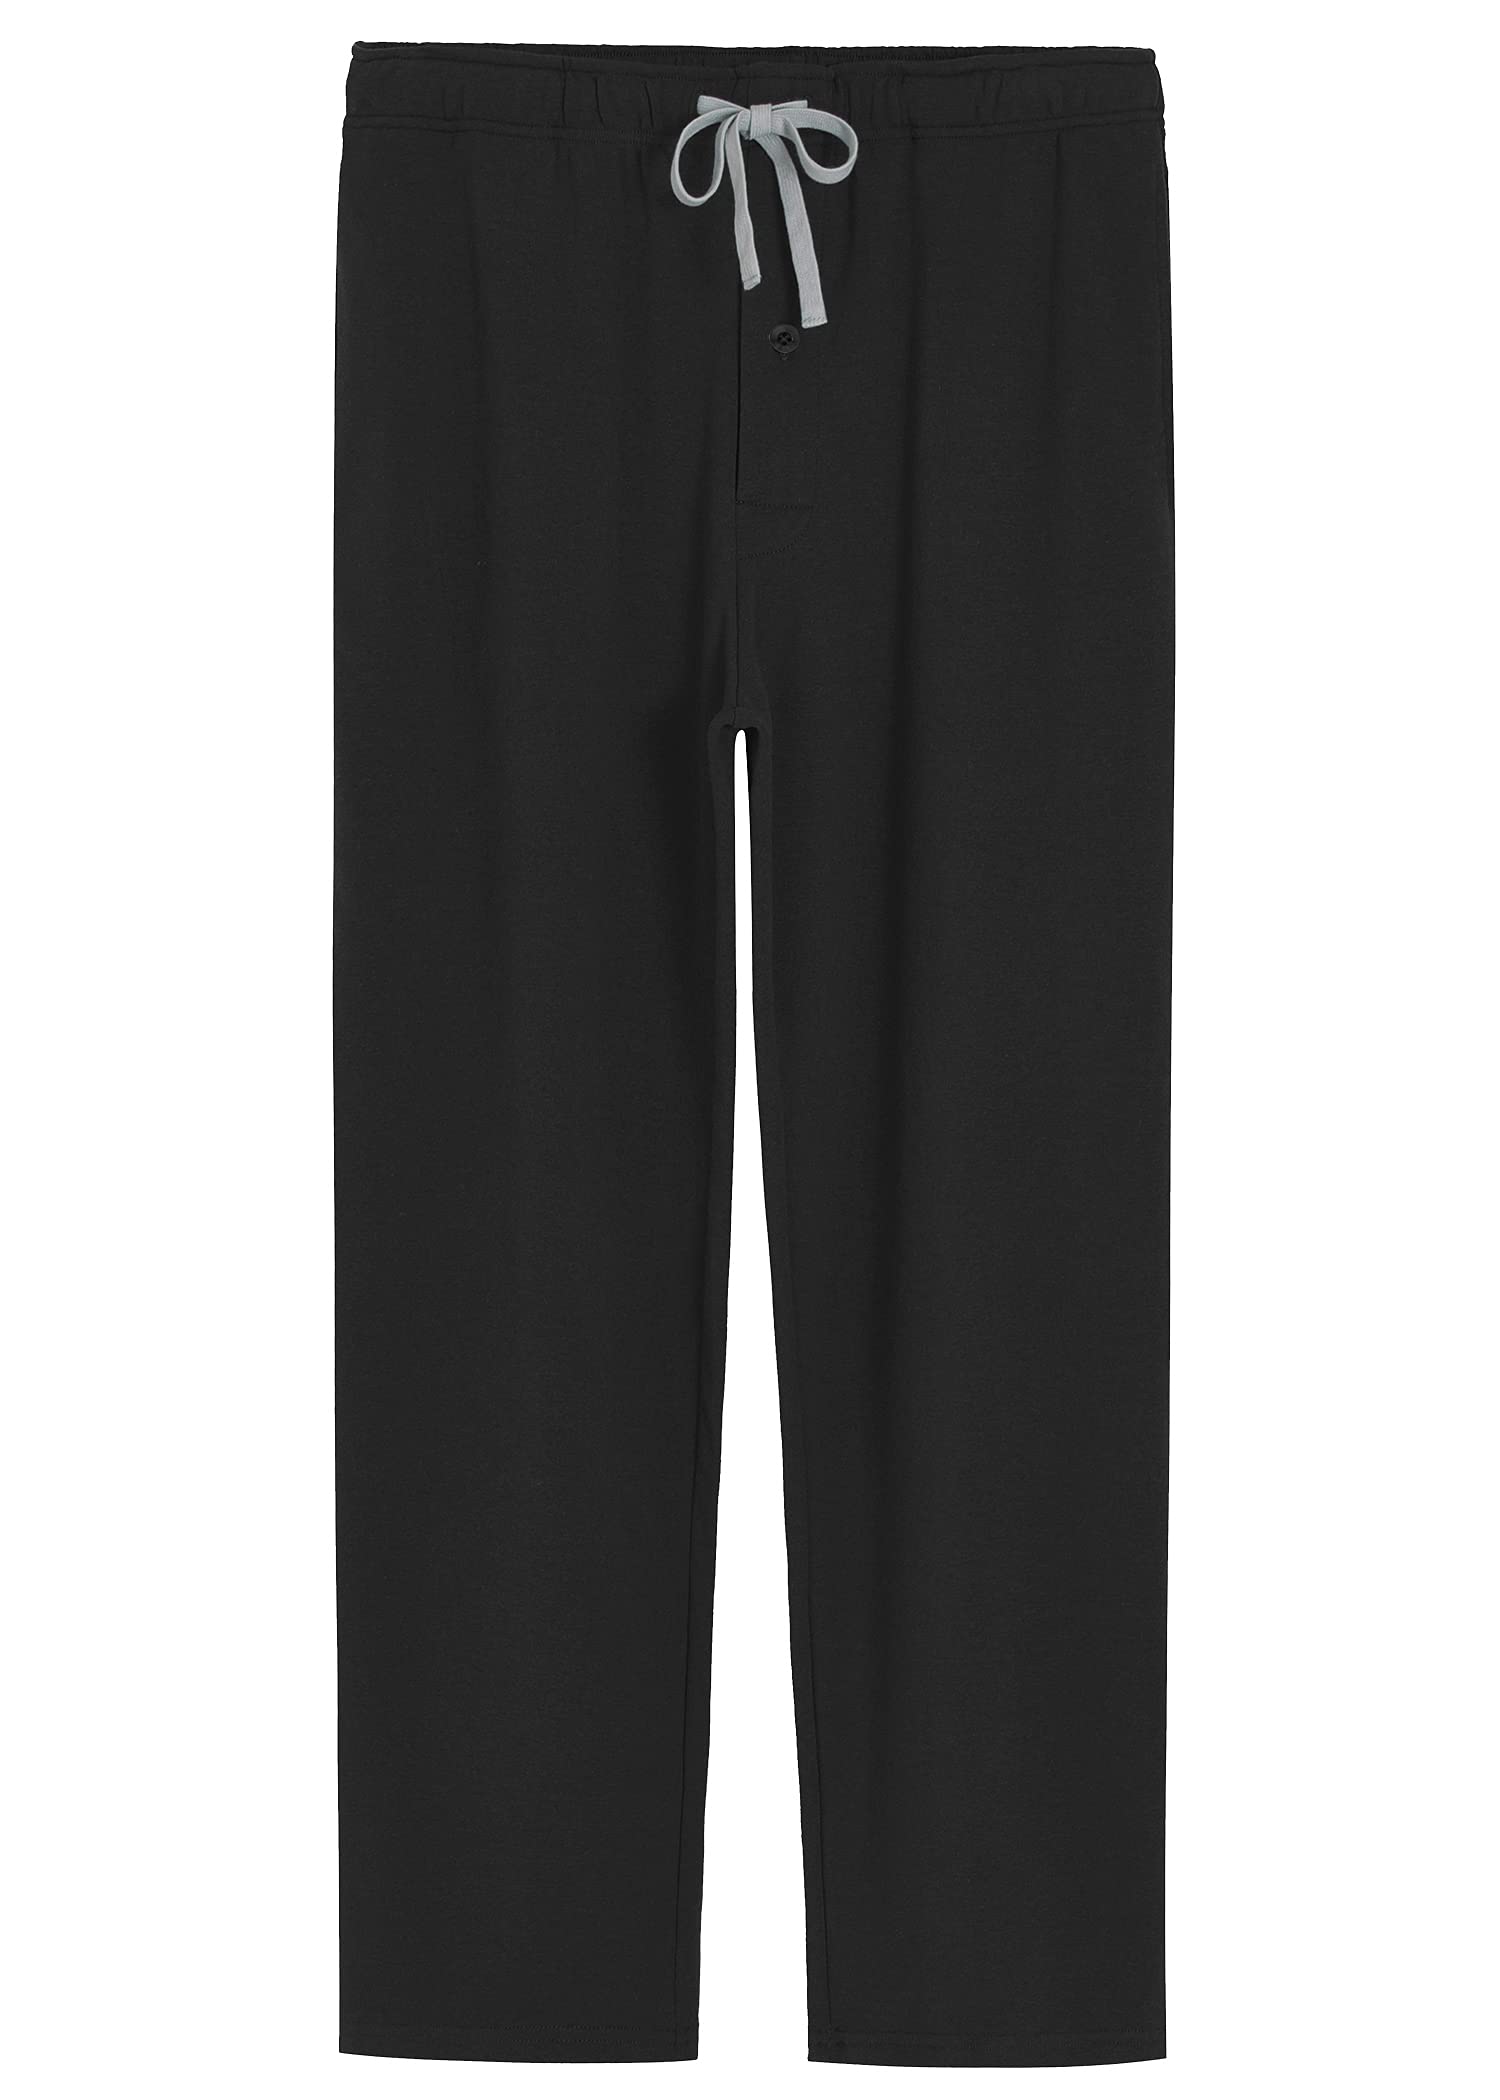 Men's Warm Pajama Pants Comfy Lounge Pants with Pockets - Latuza